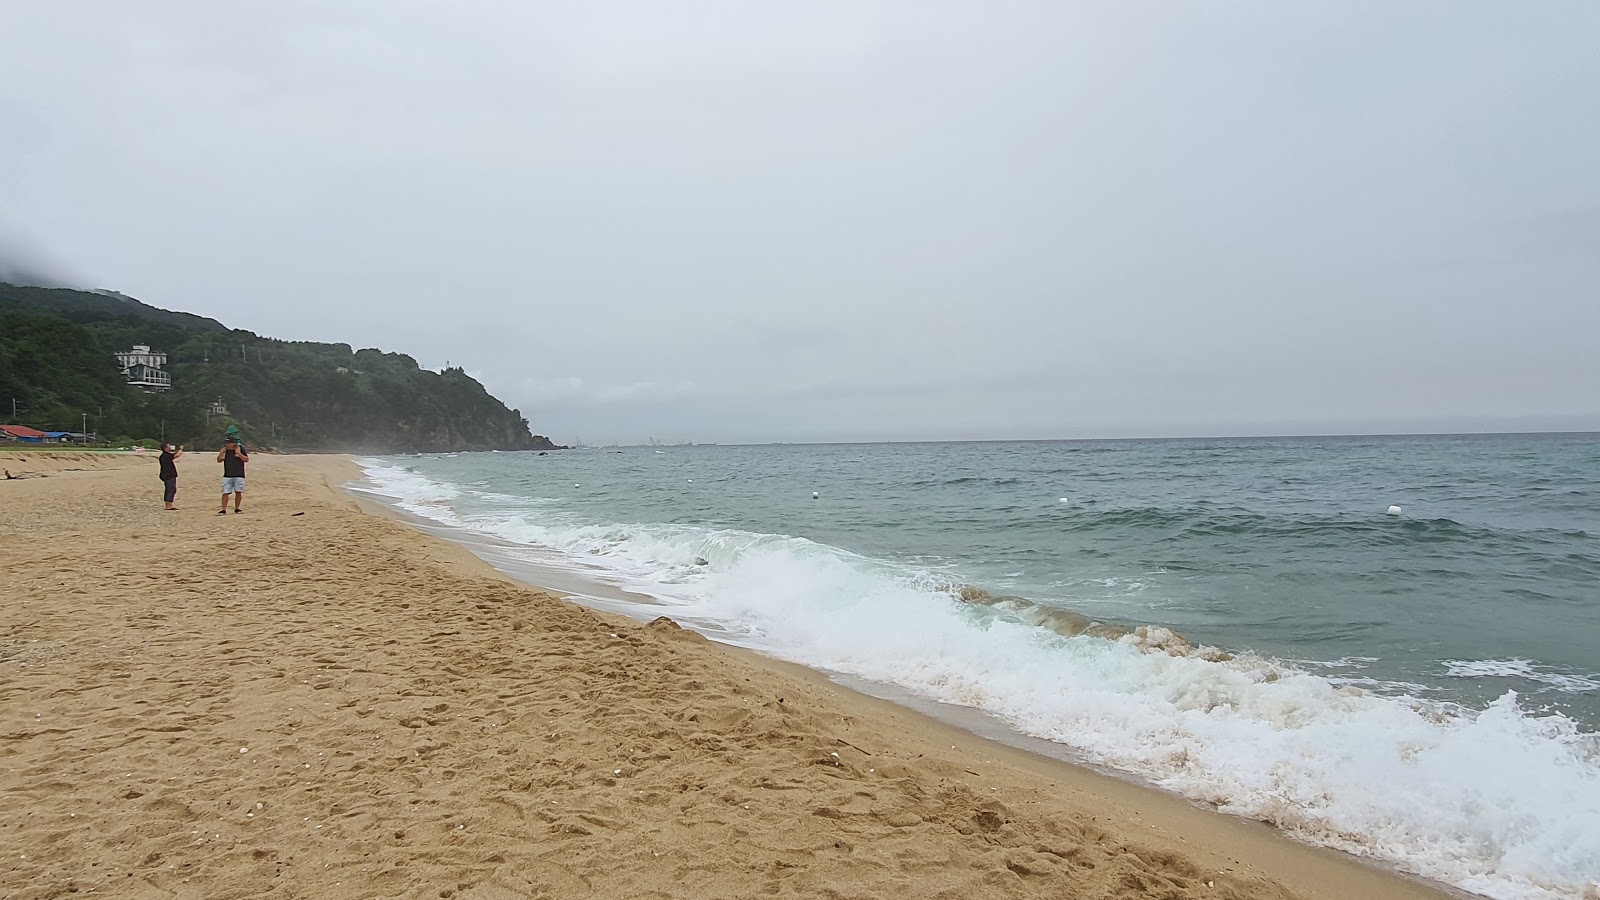 Fotografie cu Deungmyeong Beach sprijinit de stânci